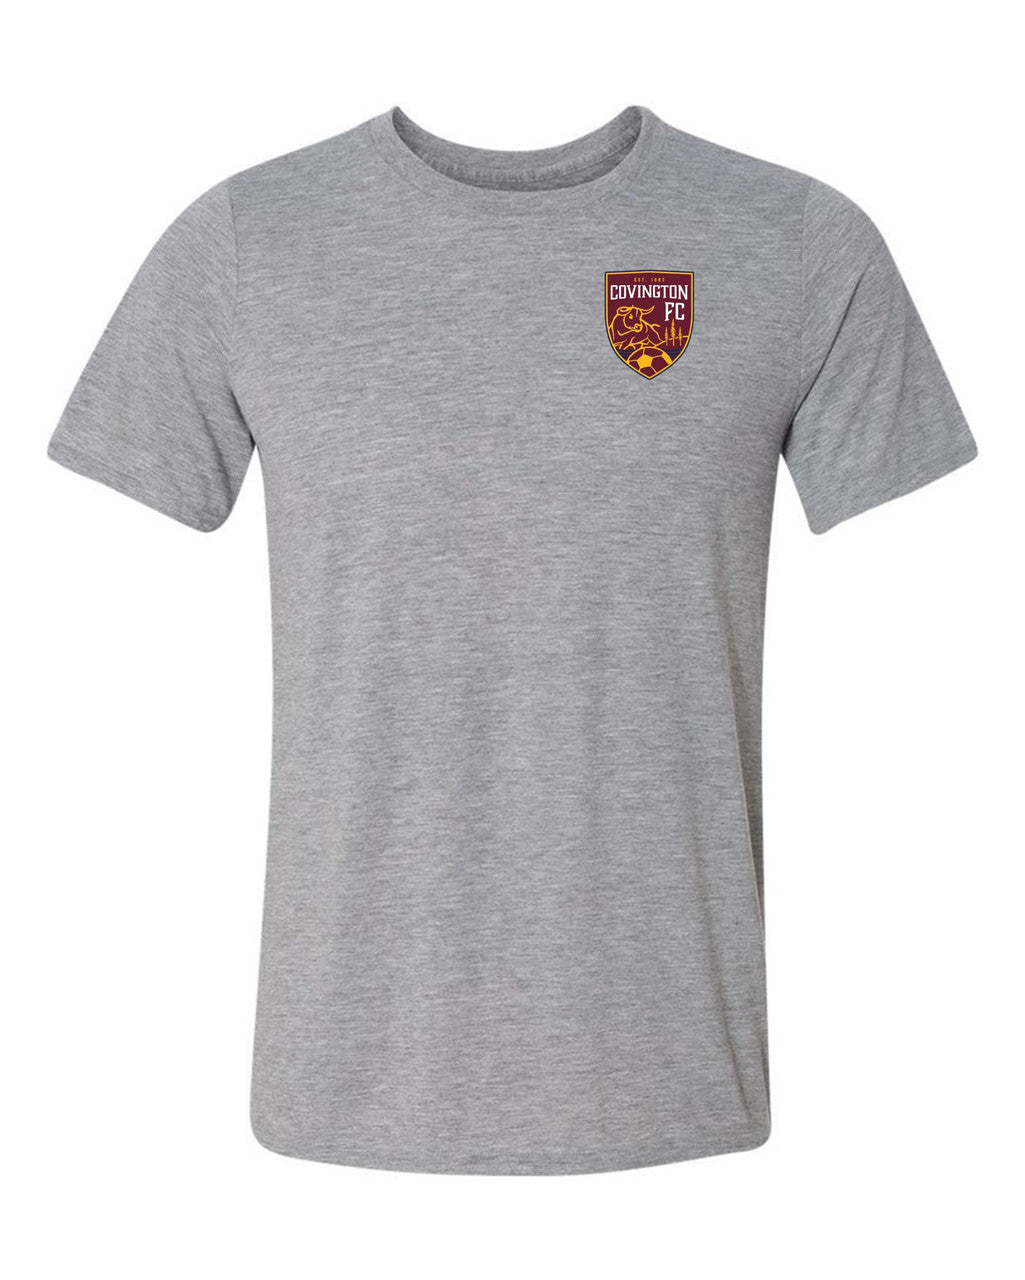 CYSA Short Sleeve Spirit T-Shirt - Navy or Grey CYSA Spiritwear NAVY MENS MEDIUM - Third Coast Soccer